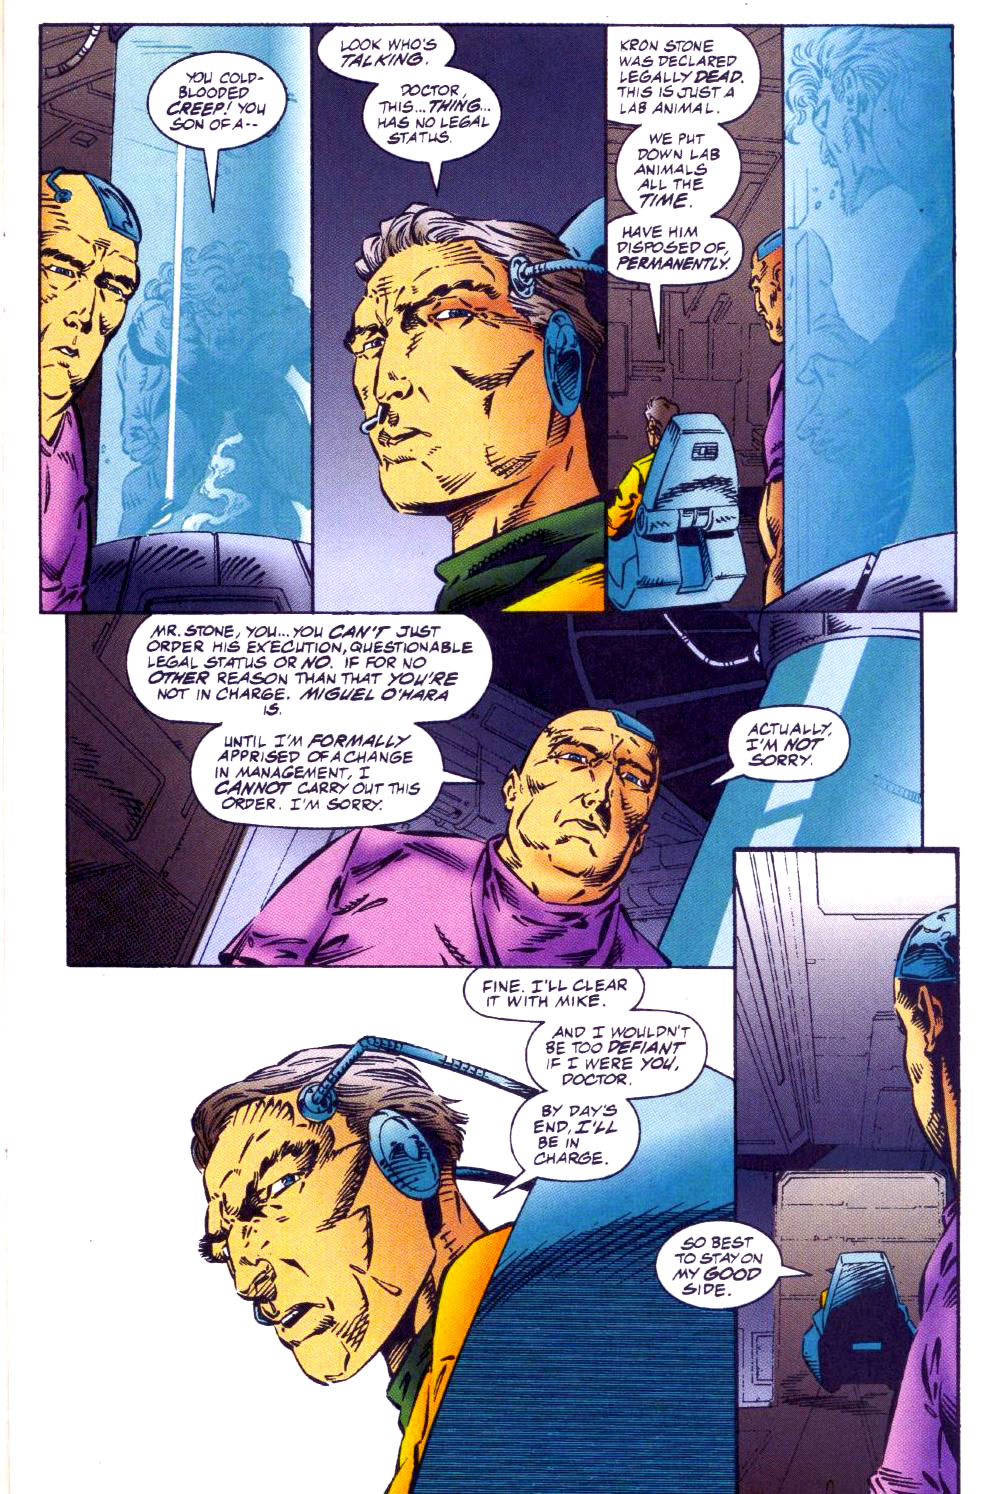 Spider-Man 2099 (1992) issue 41 - Page 7